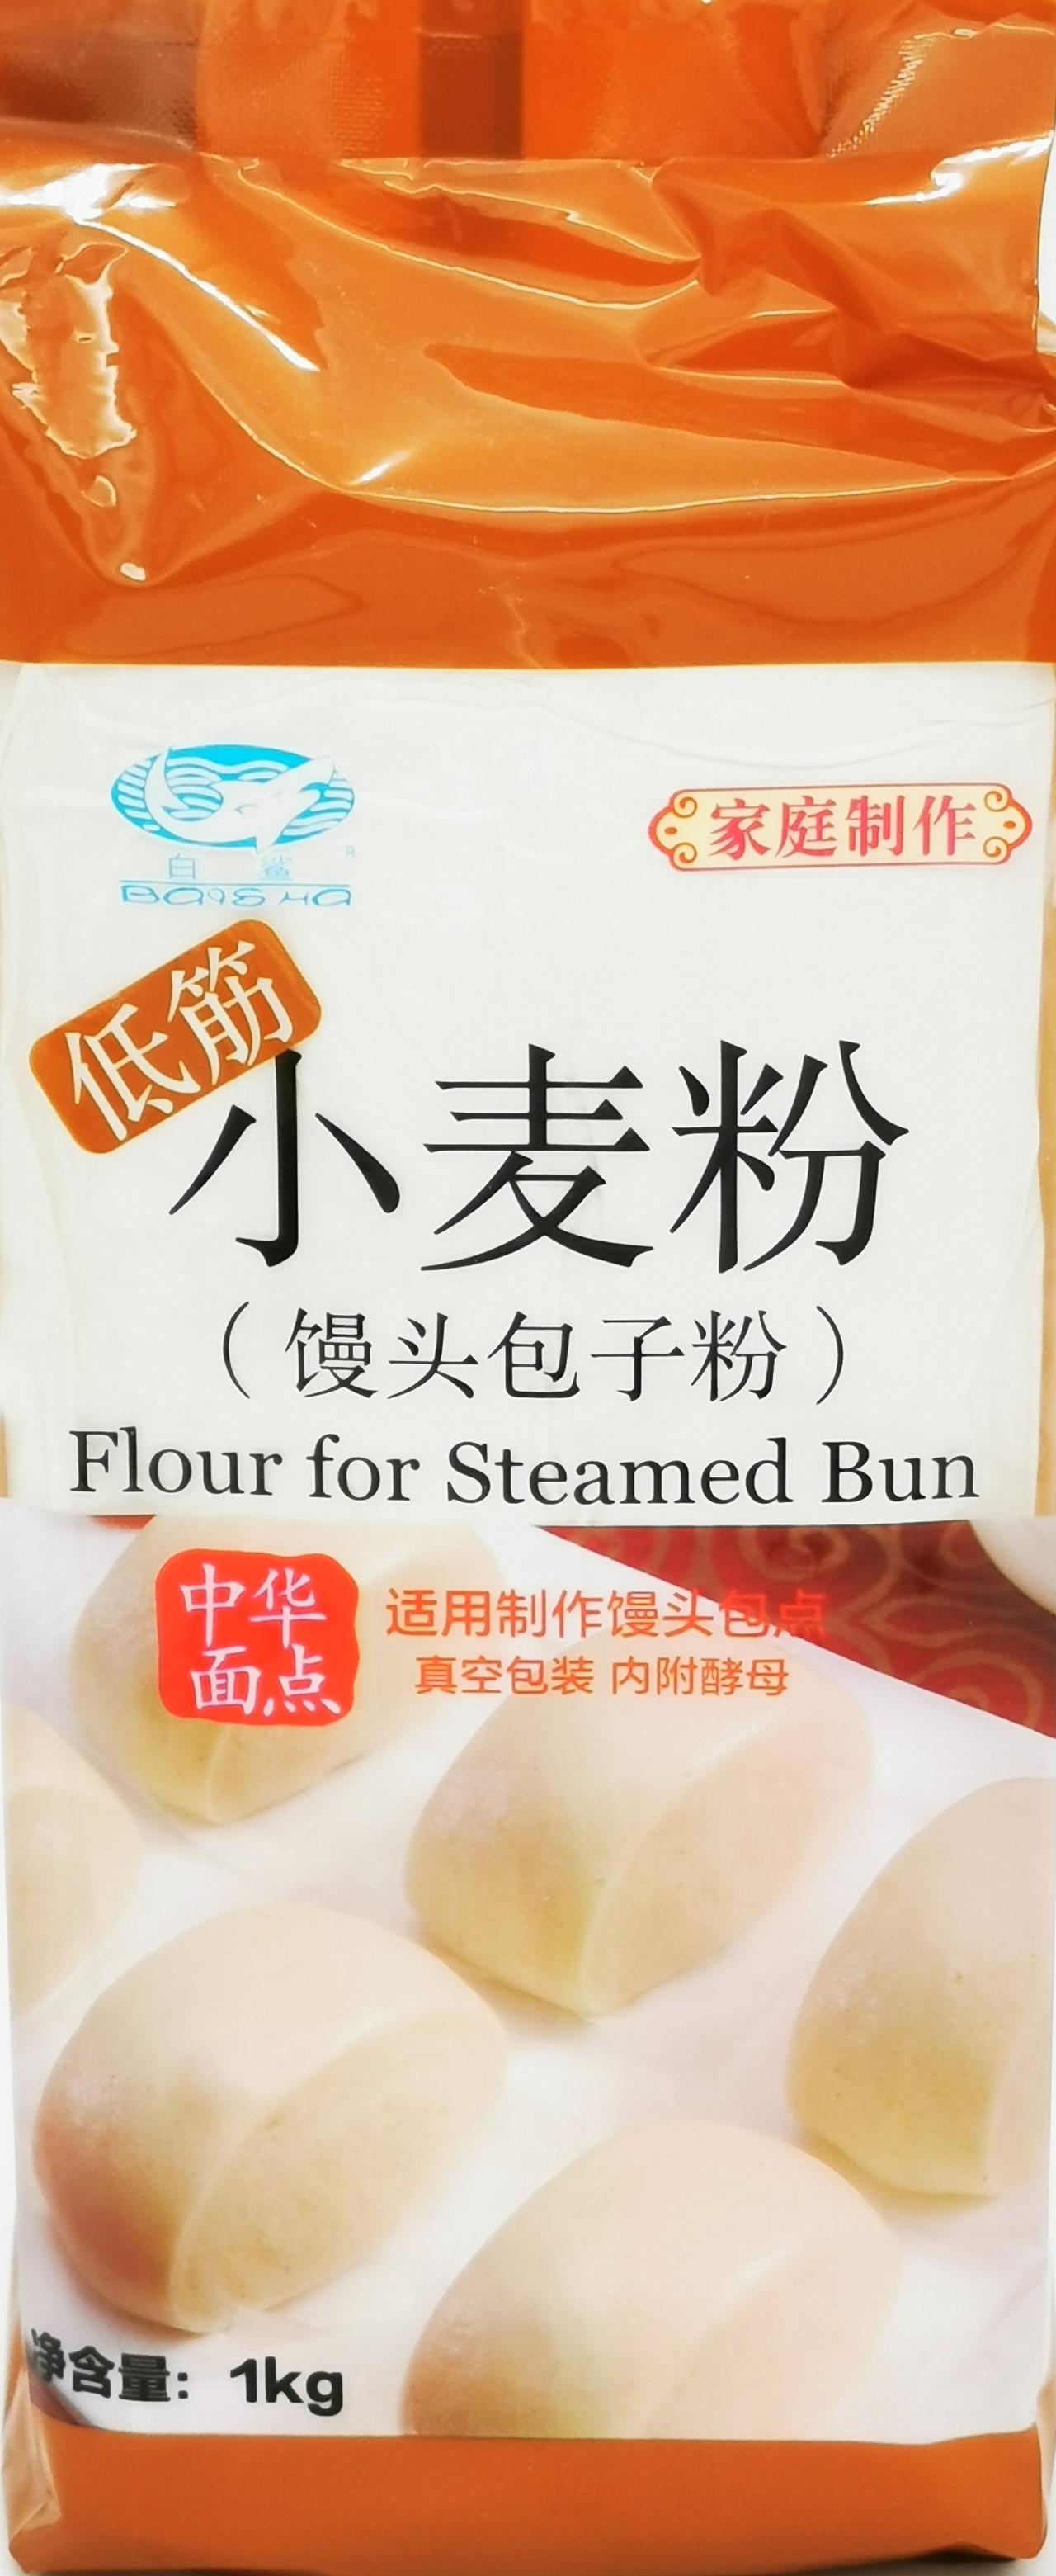 Flour for Steamed Bun 1Kg